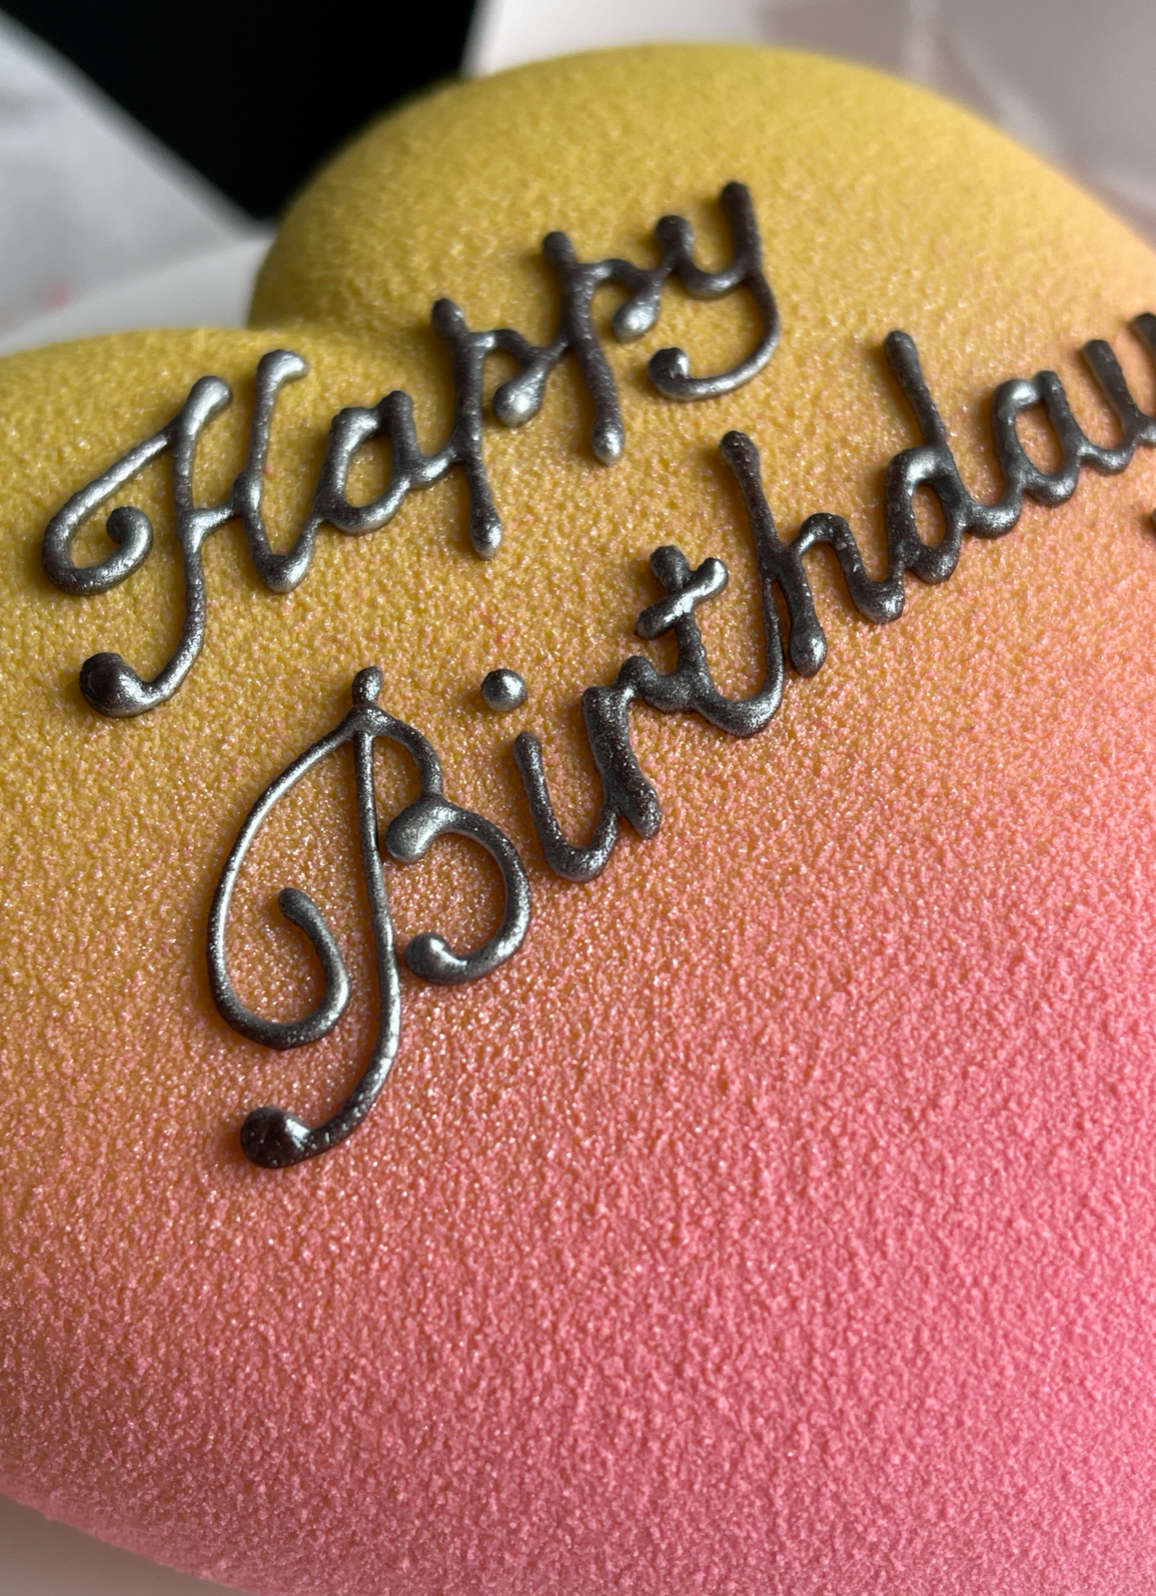 Cake “Happy Birthday” - mango, passion fruit, coconut